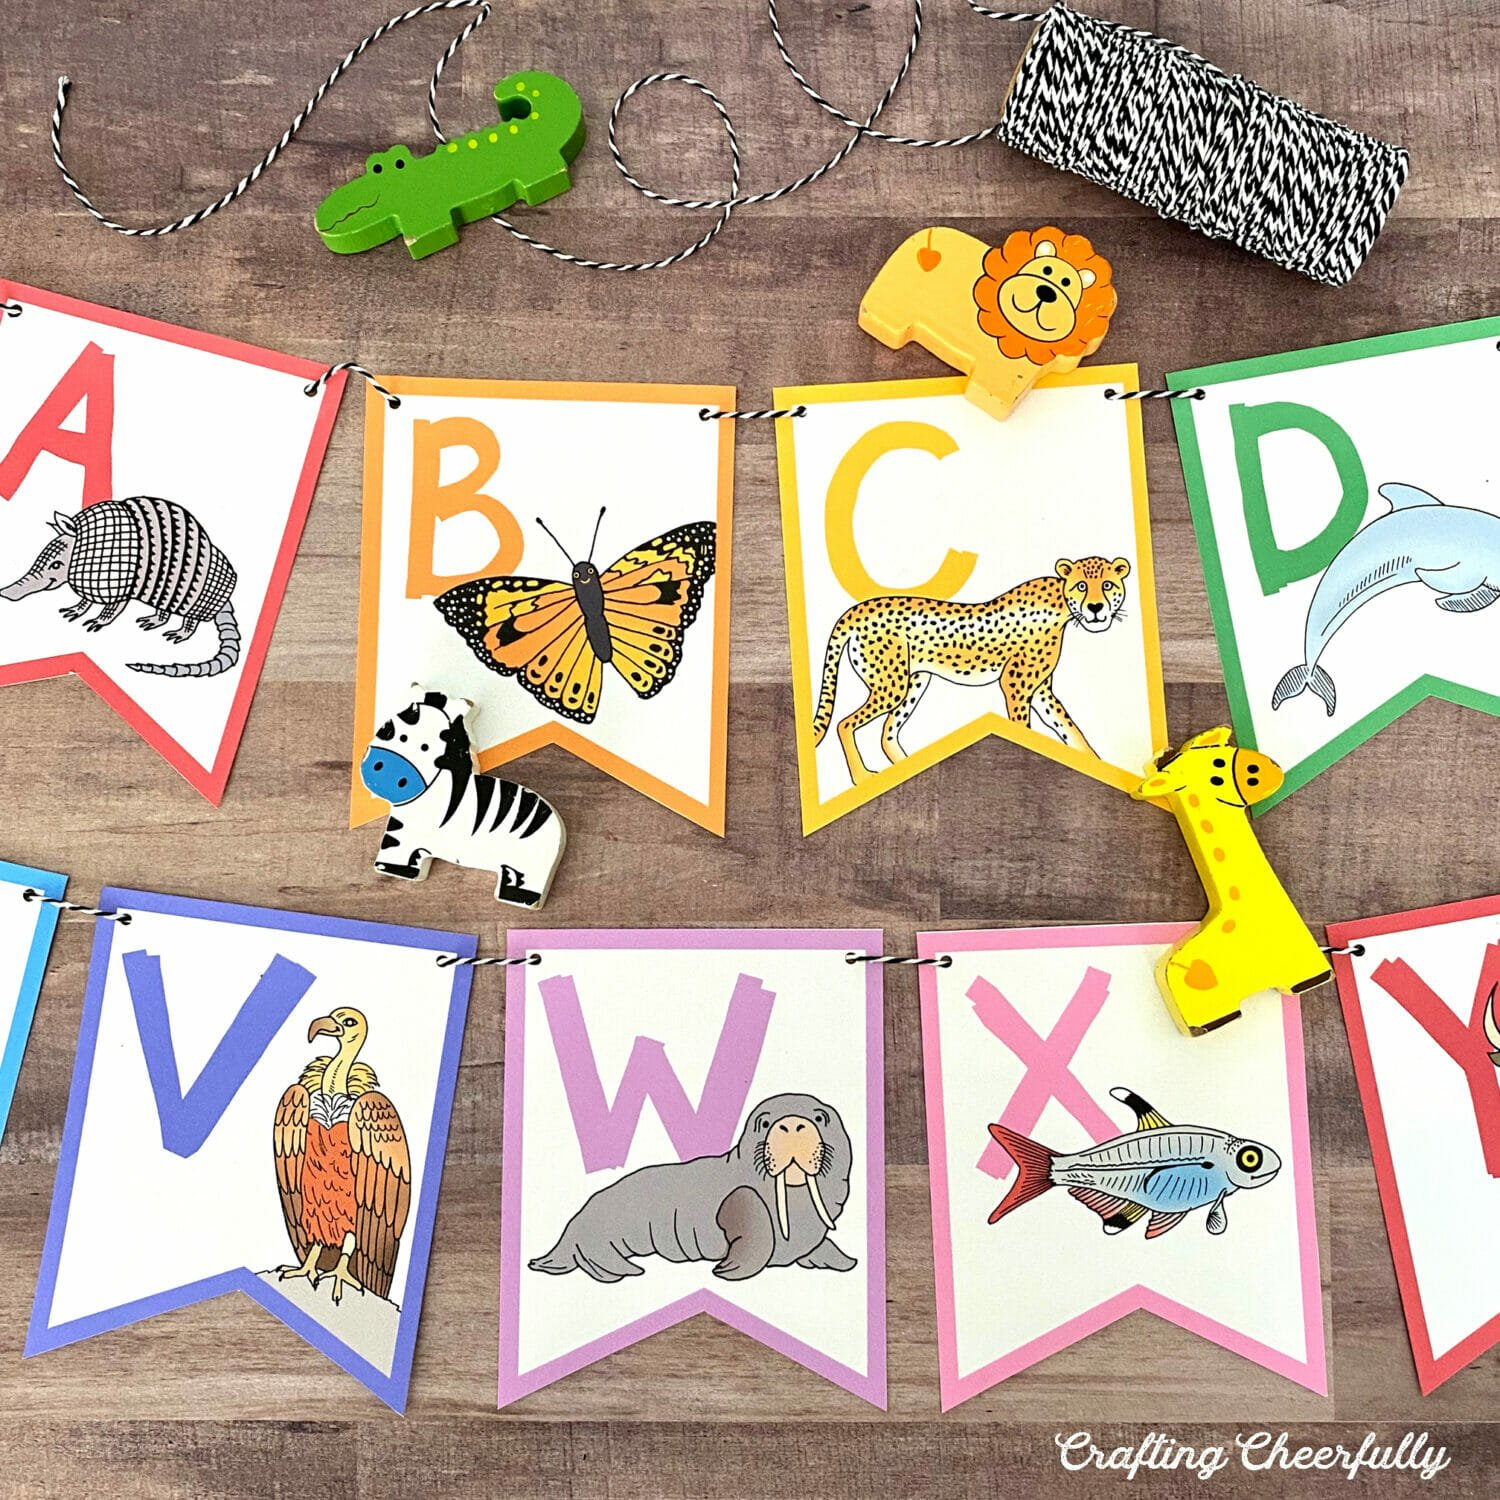 Diy Abc Animal Banner - Printable Pennantscrafting Cheerfully within Free Printable Abc Banner